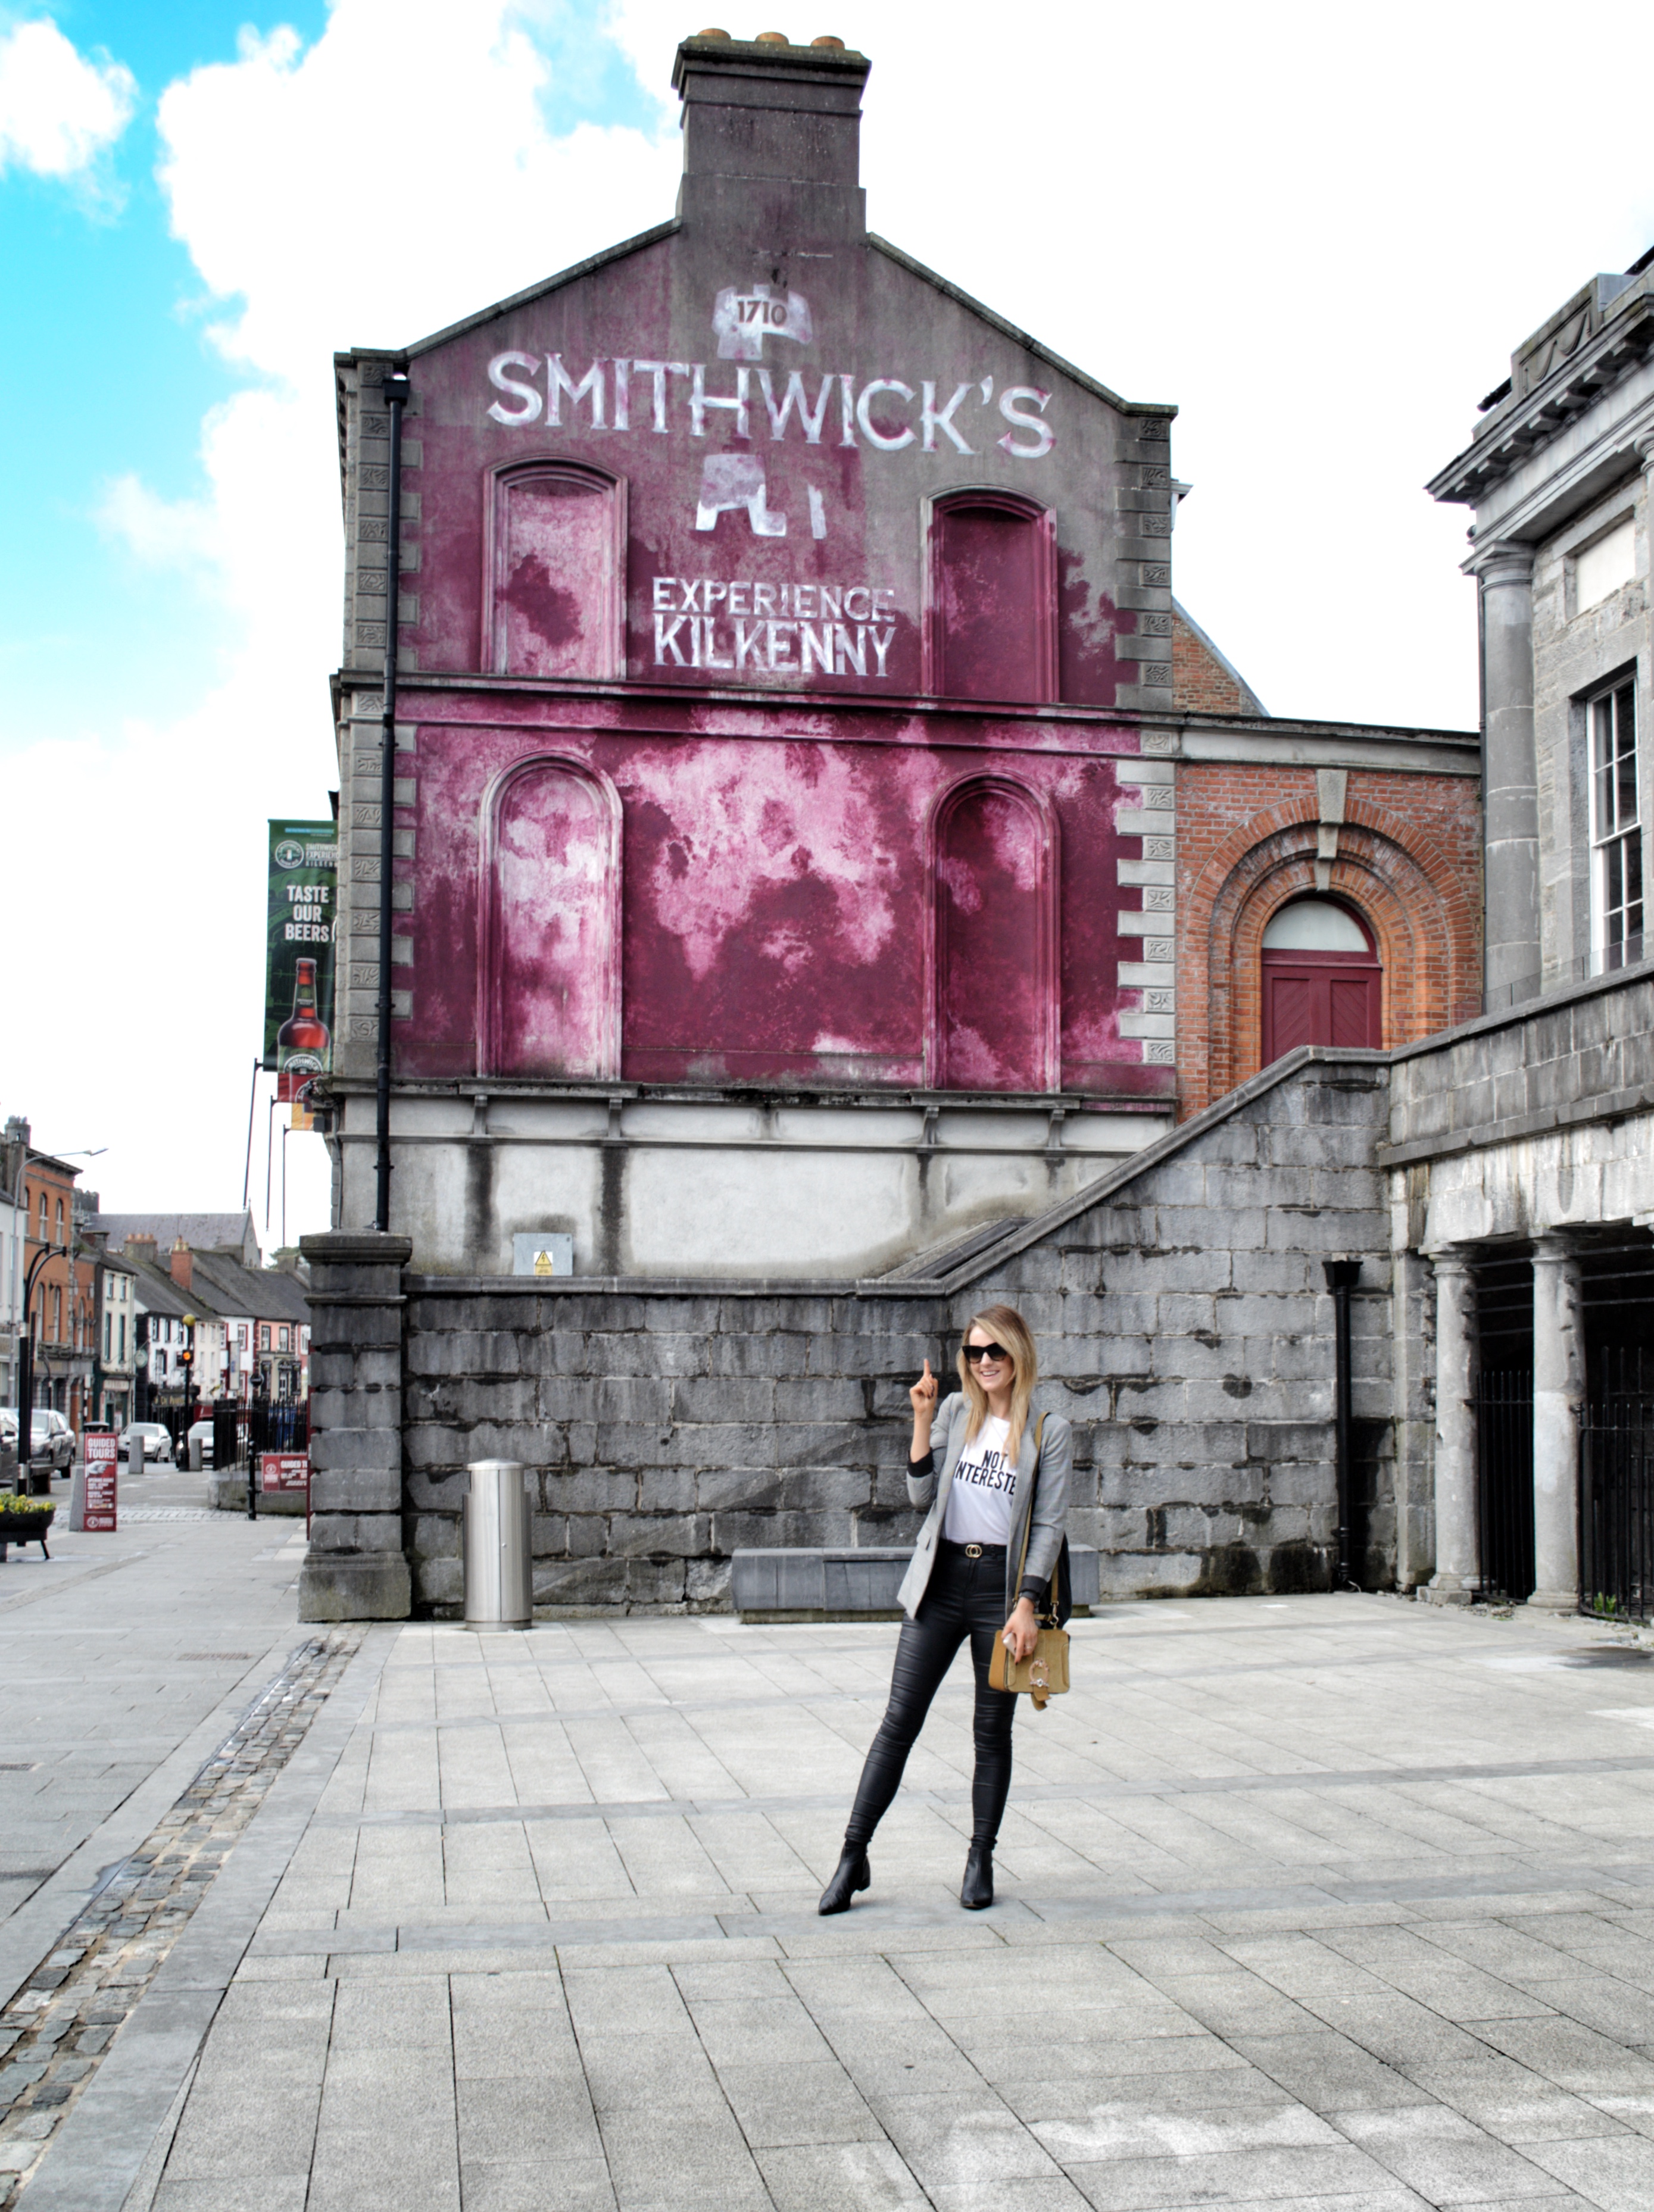 smithwick's experience kilkenny